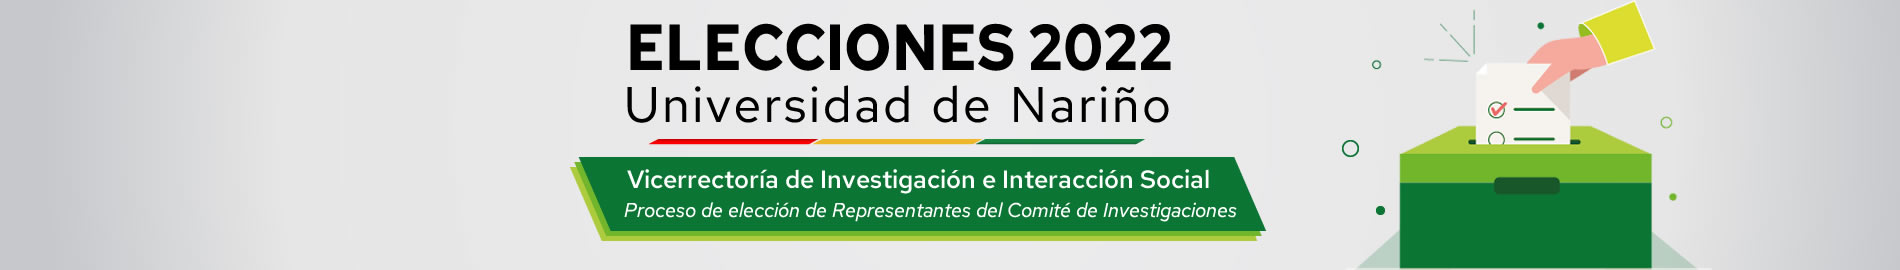 banner_elecciones_comite_investigaciones